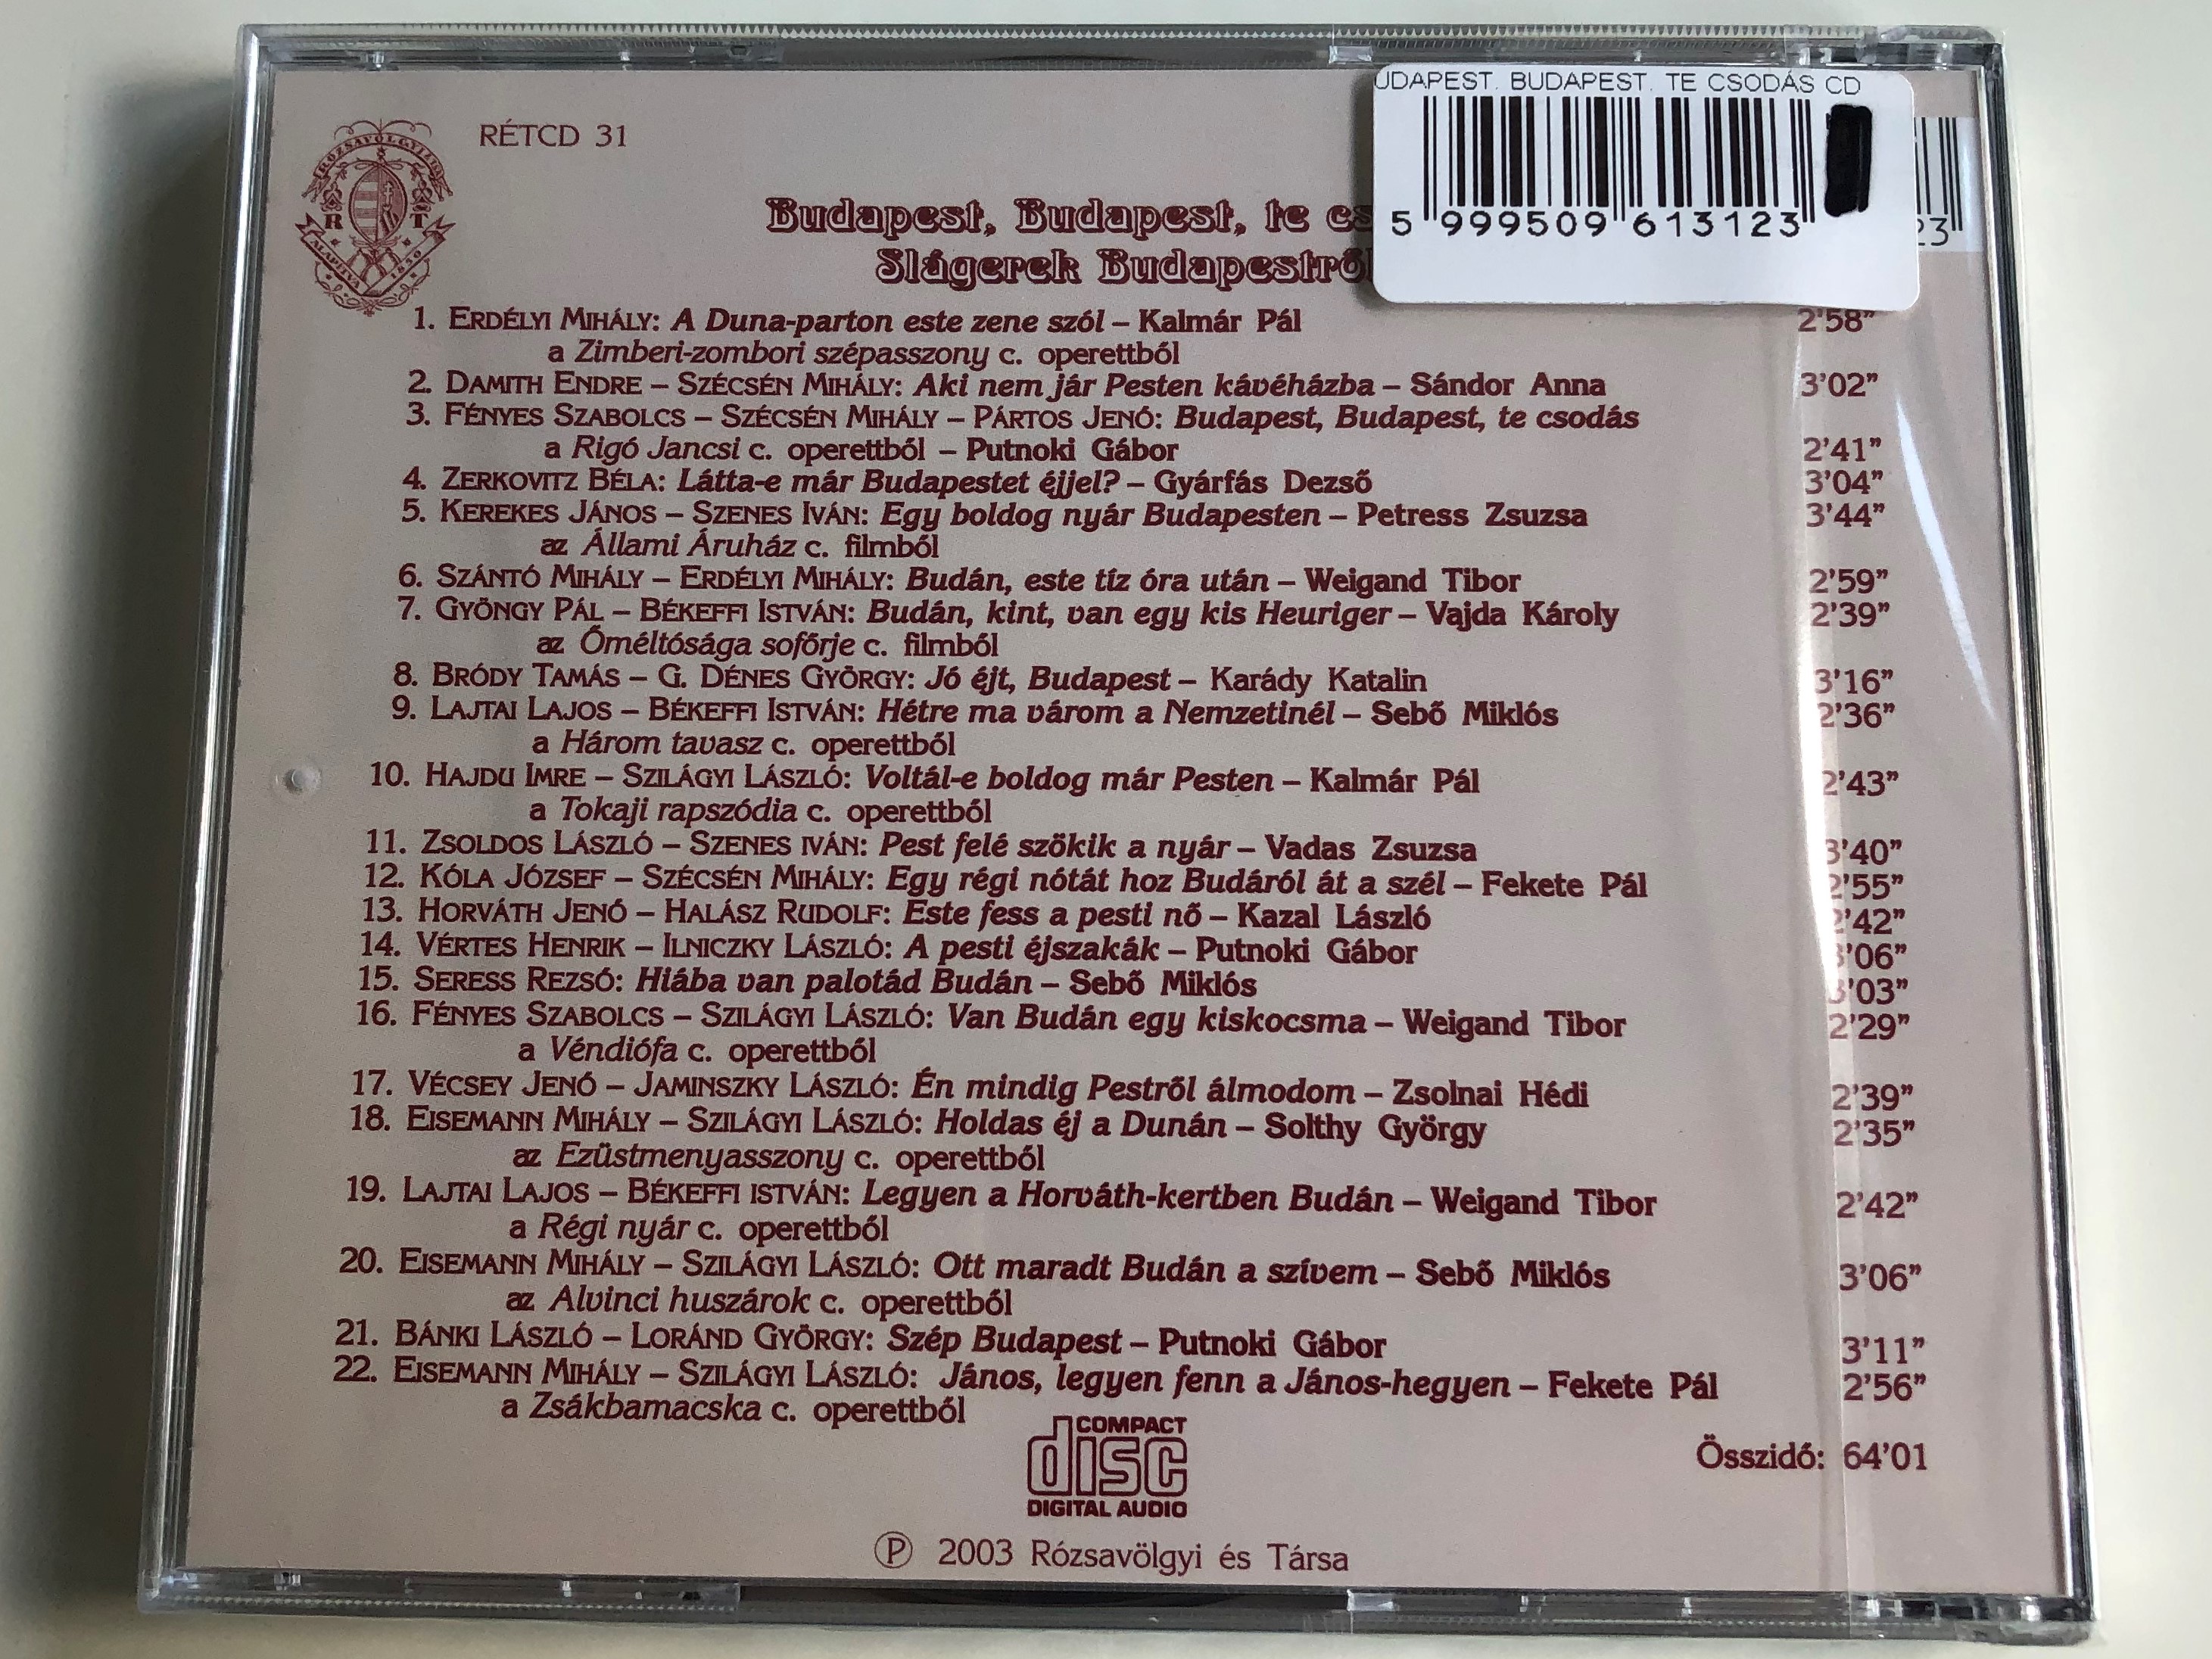 budapest-budapest-te-esodas-slagerek-budapestrol-r-zsav-lgyi-s-t-rsa-audio-cd-2003-r-tcd-31-2-.jpg